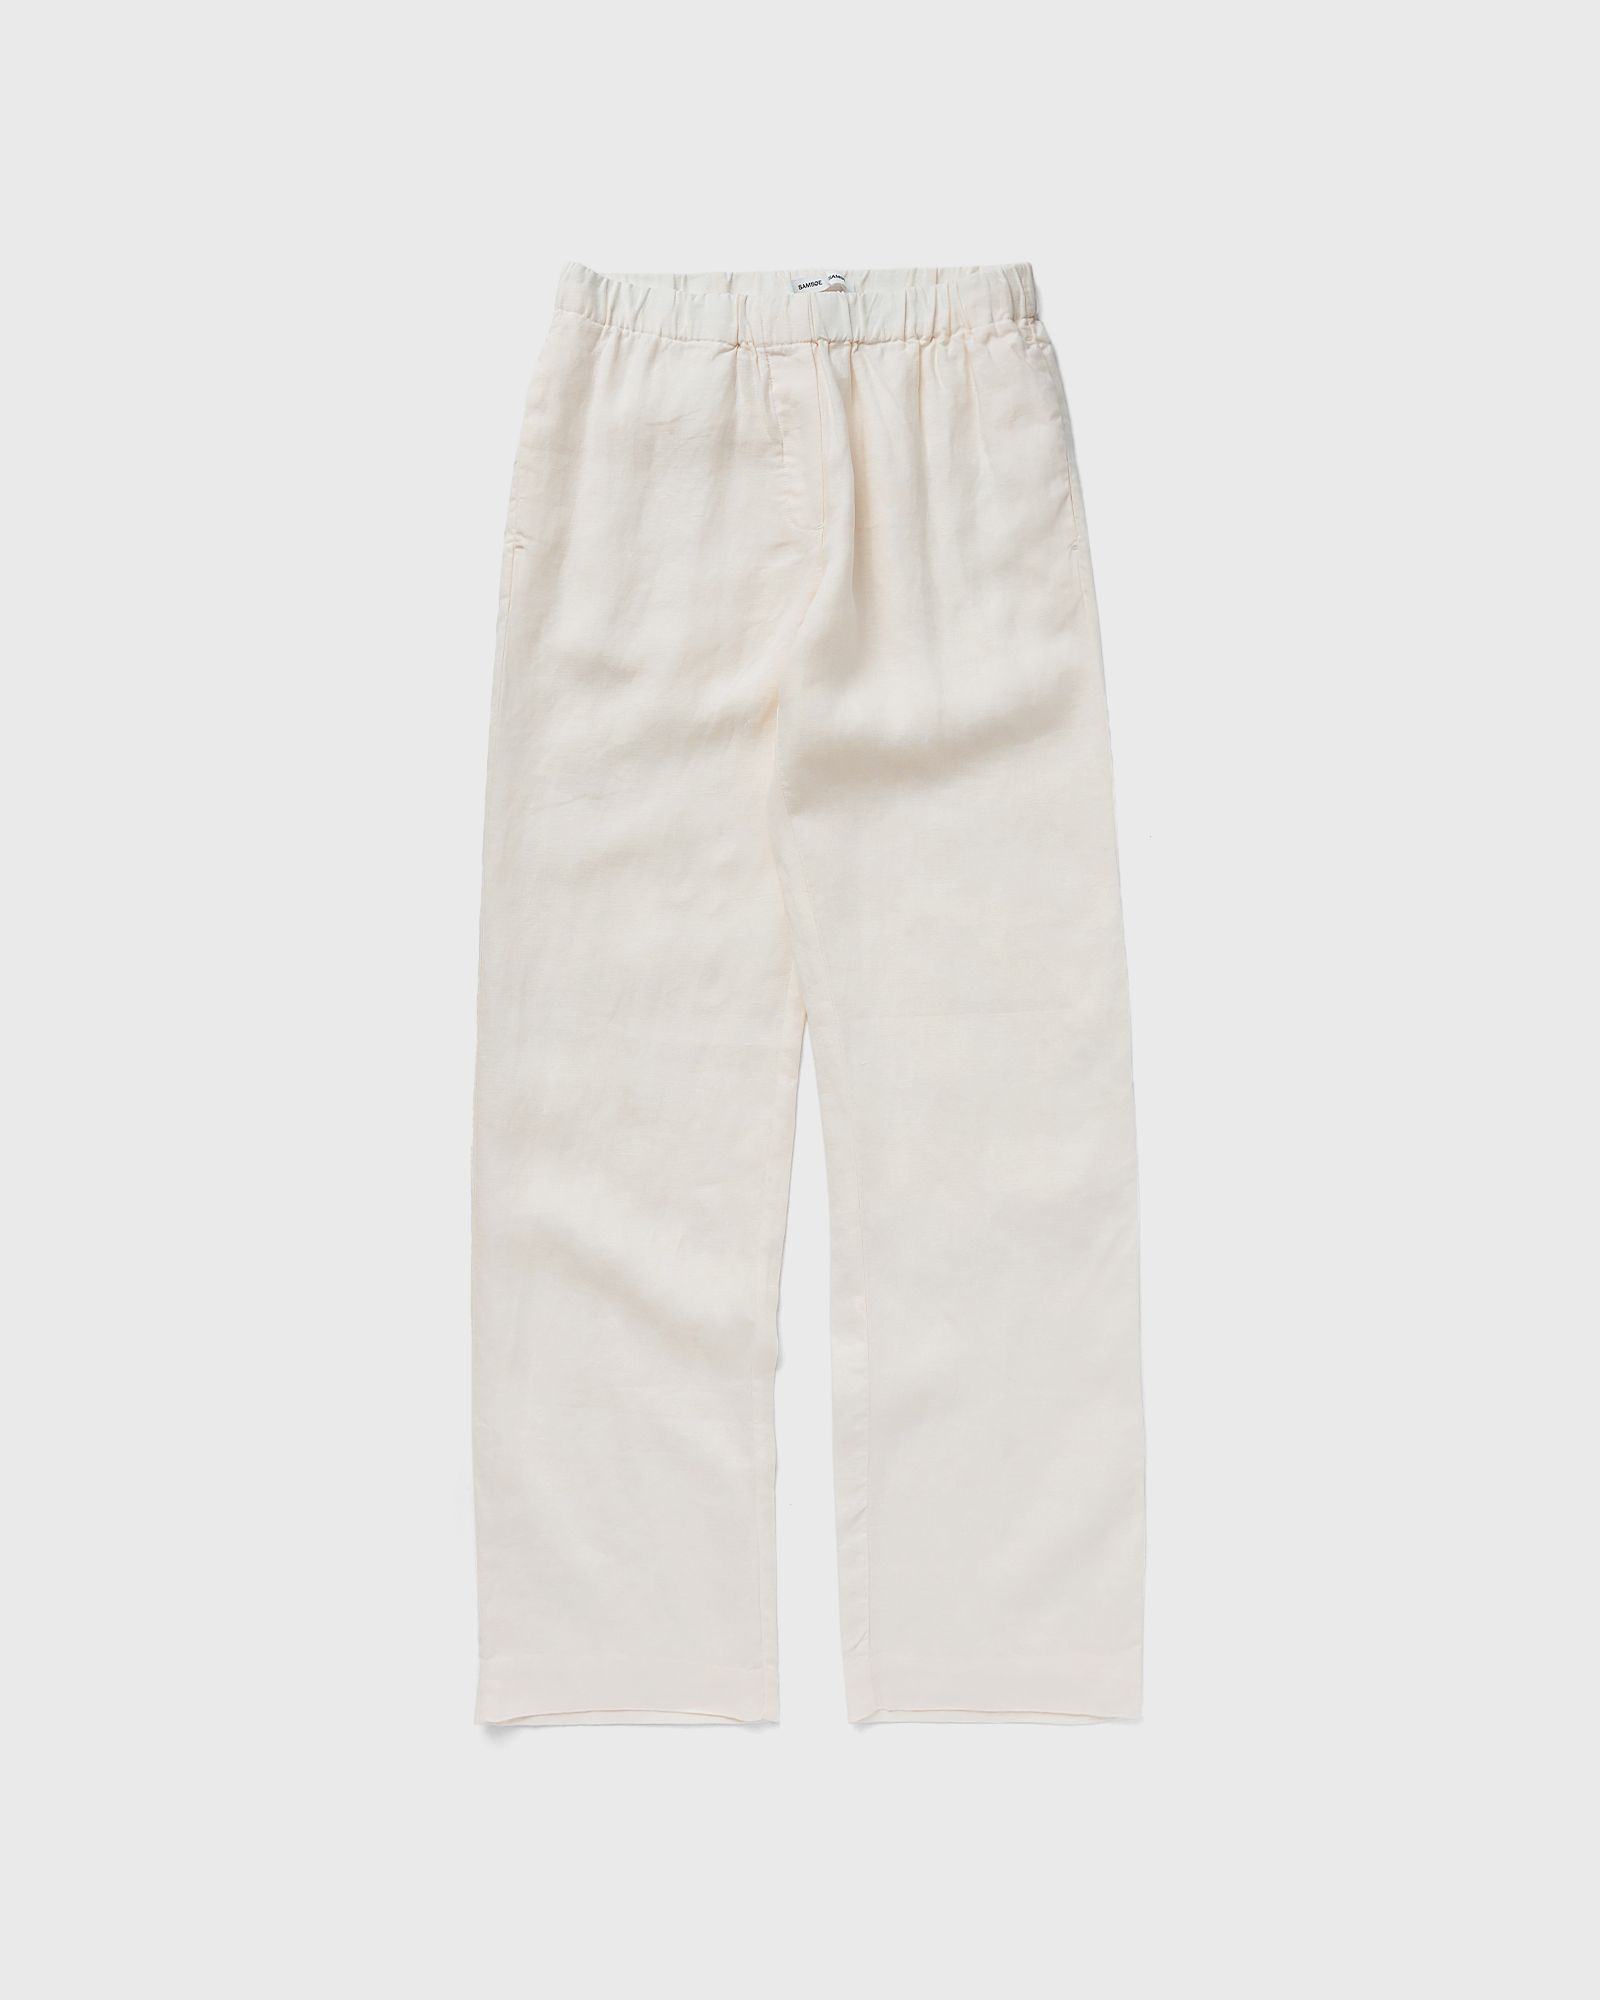 Samsøe & Samsøe - hoys straight trousers women casual pants white in größe:m